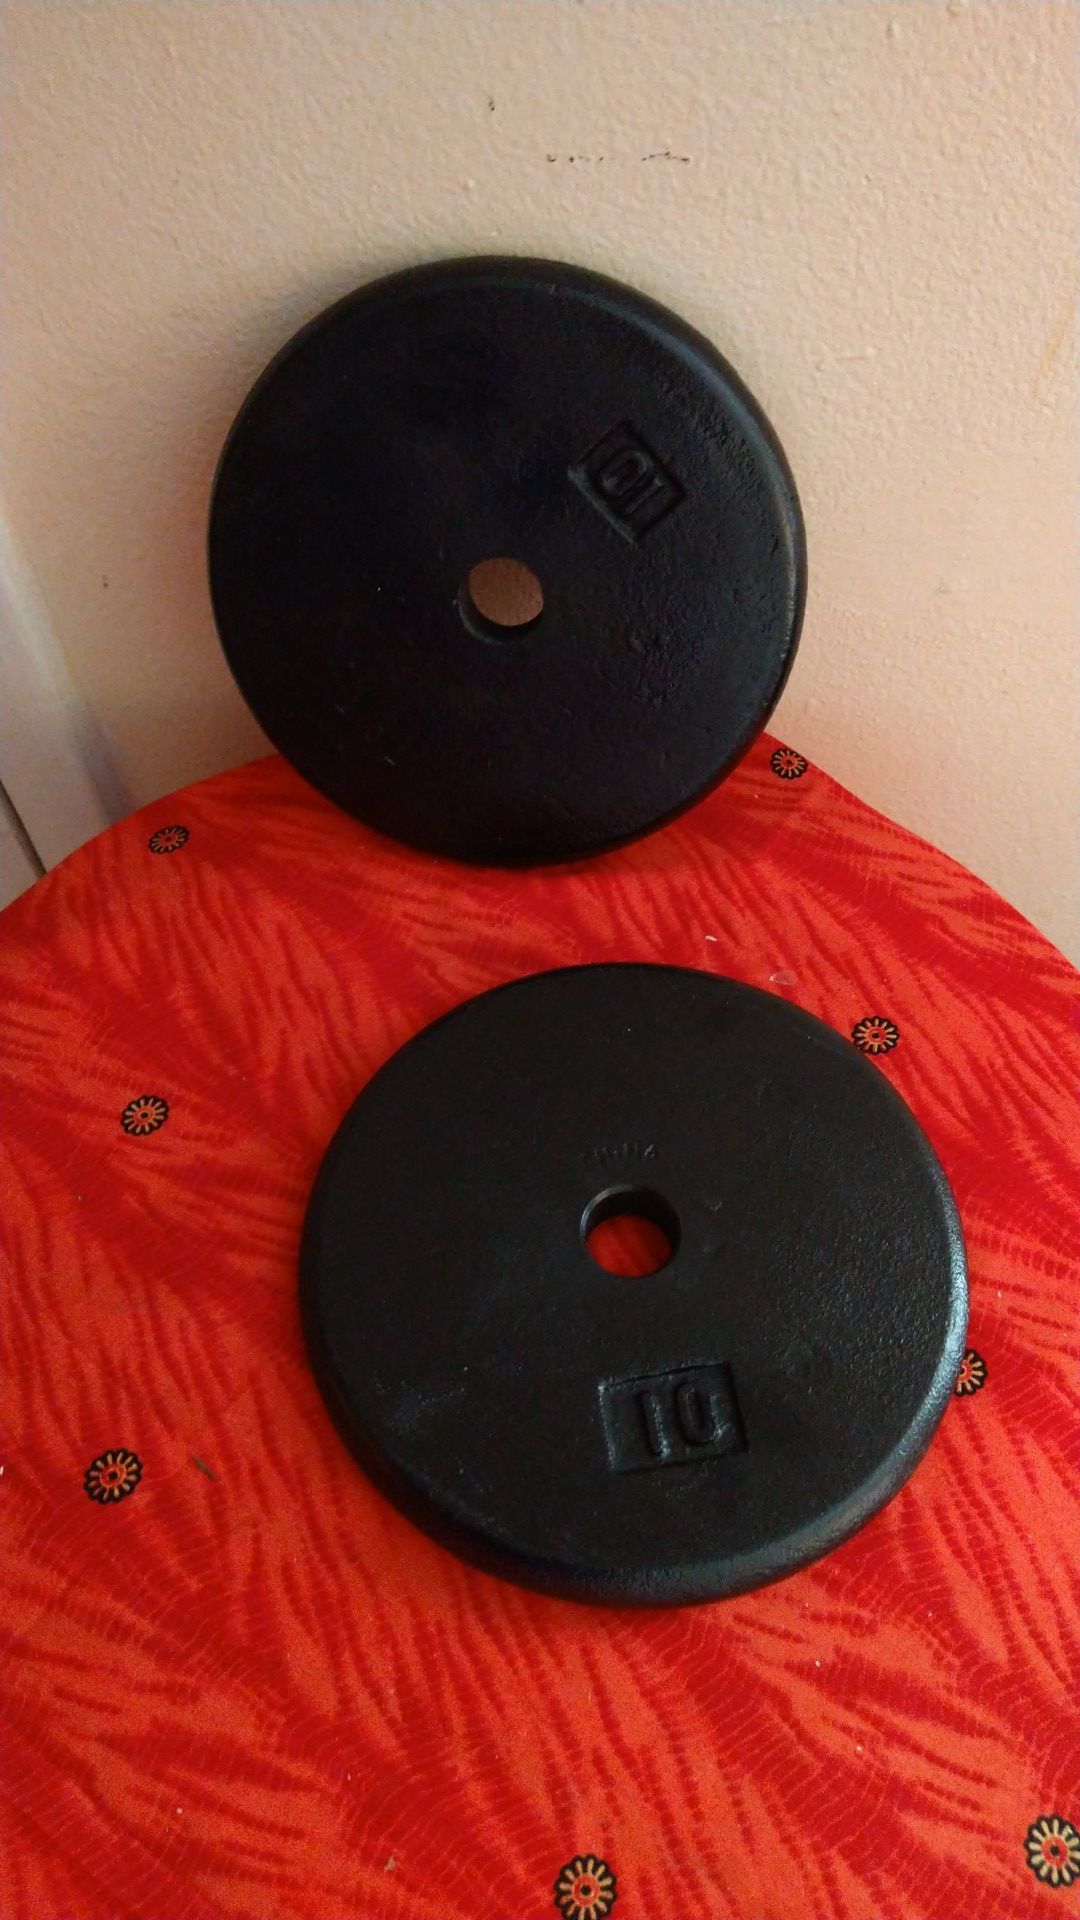 Disc weights